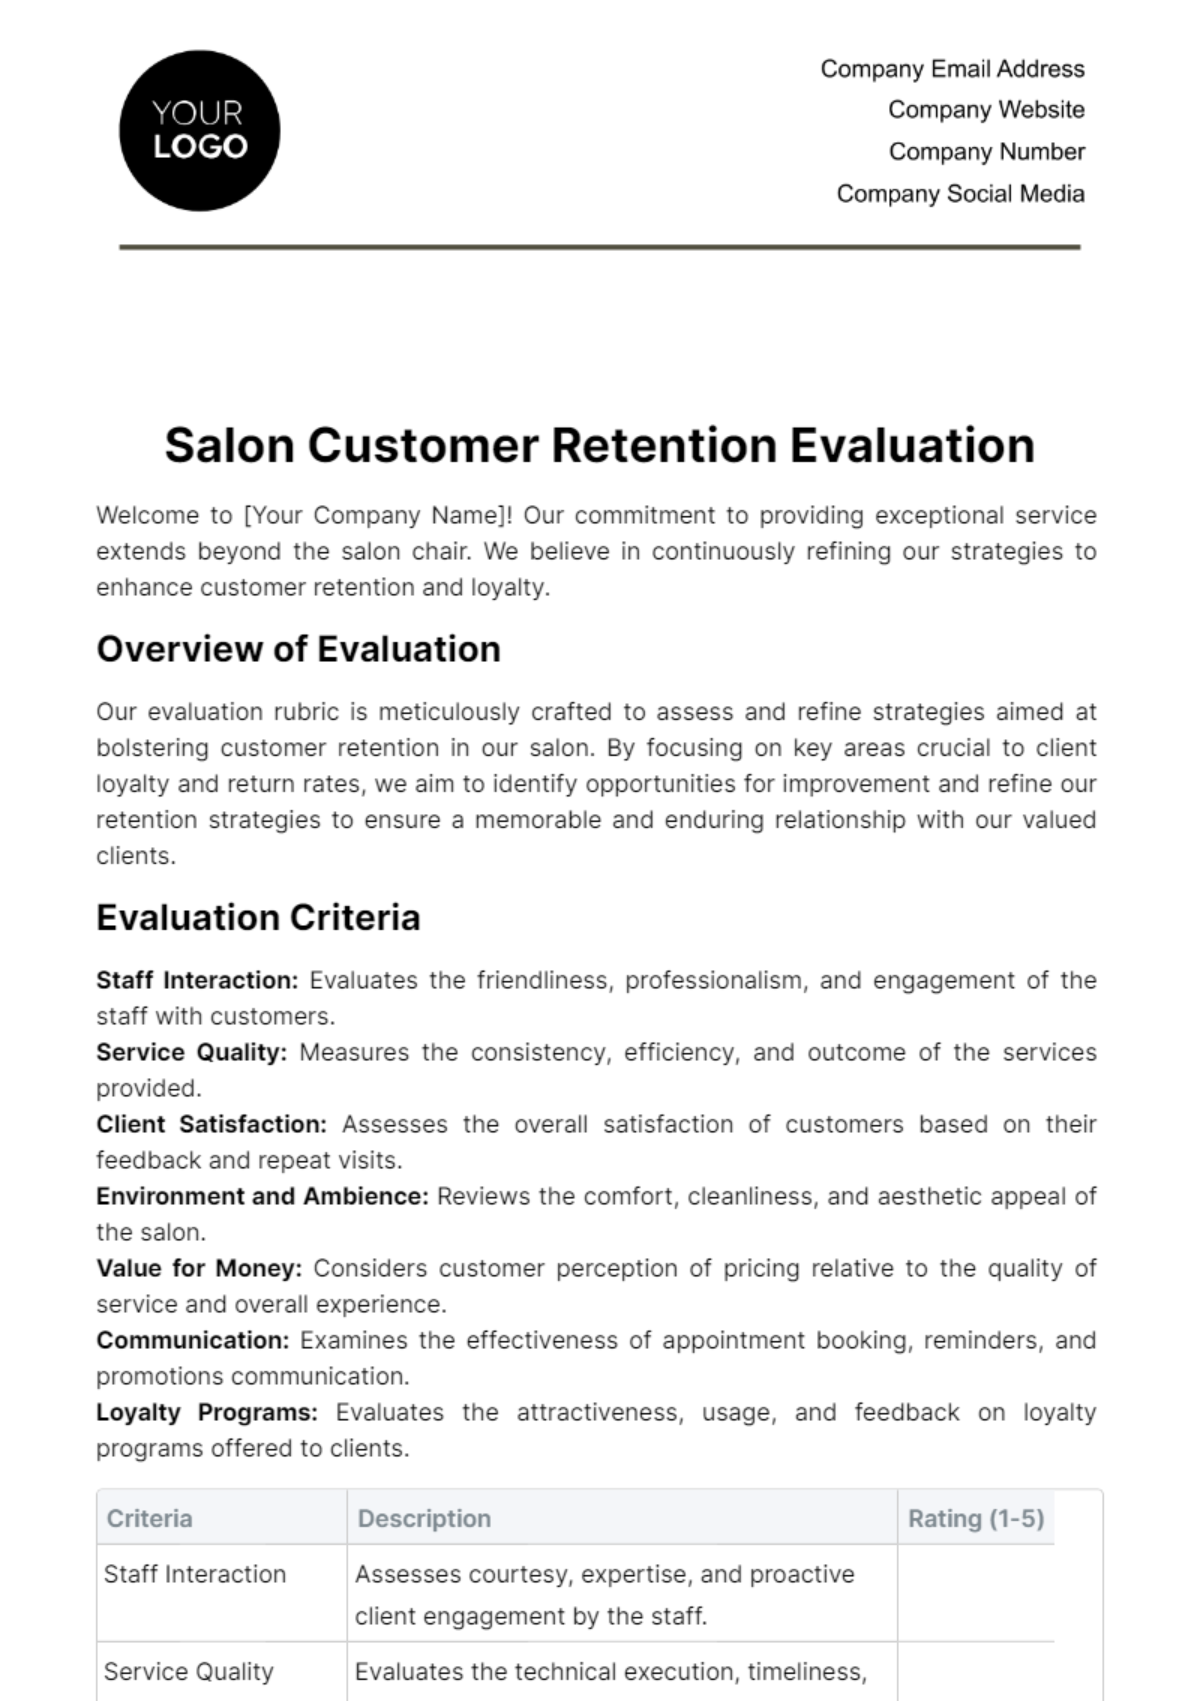 Salon Customer Retention Evaluation Template